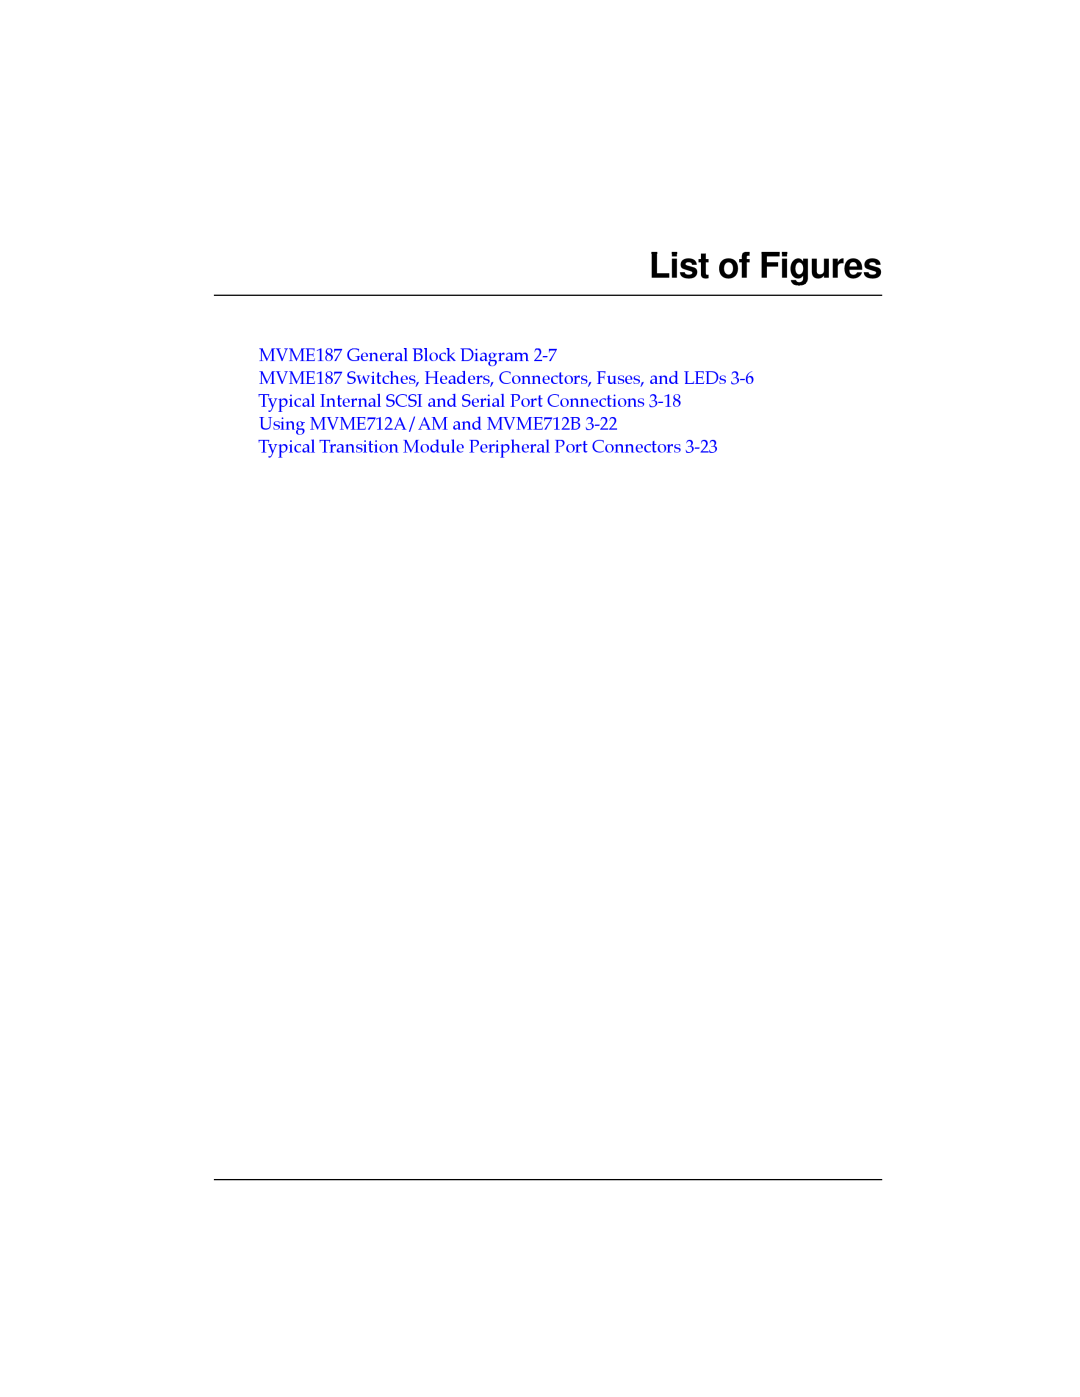 Motorola manual List of Figures, MVME187 General Block Diagram, Using MVME712A/AM and MVME712B 